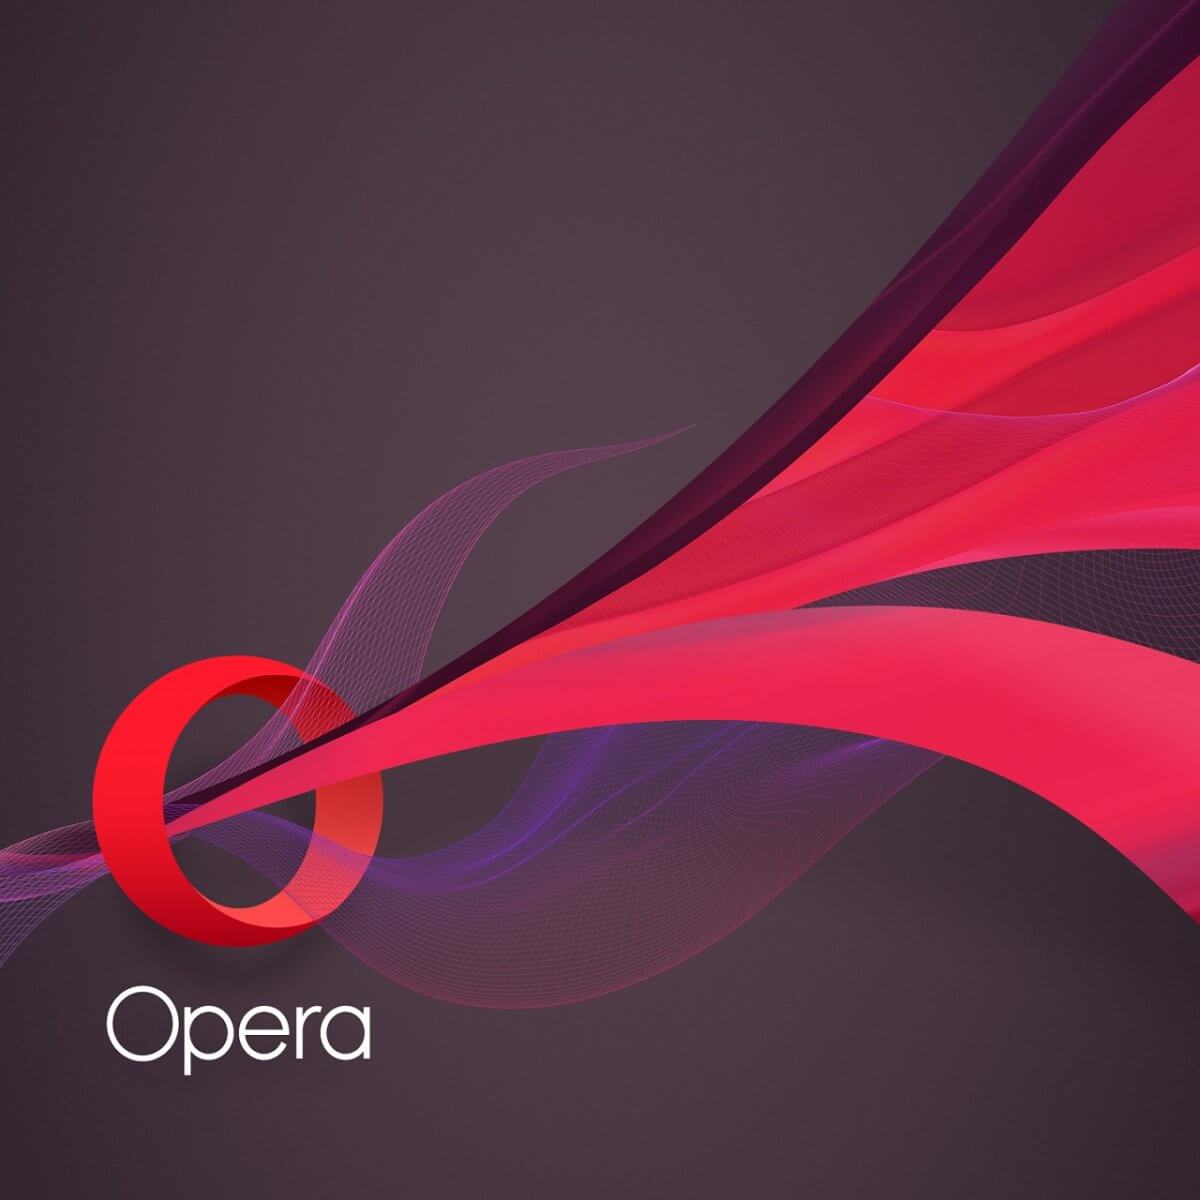 instal the last version for ios Opera GX 99.0.4788.75